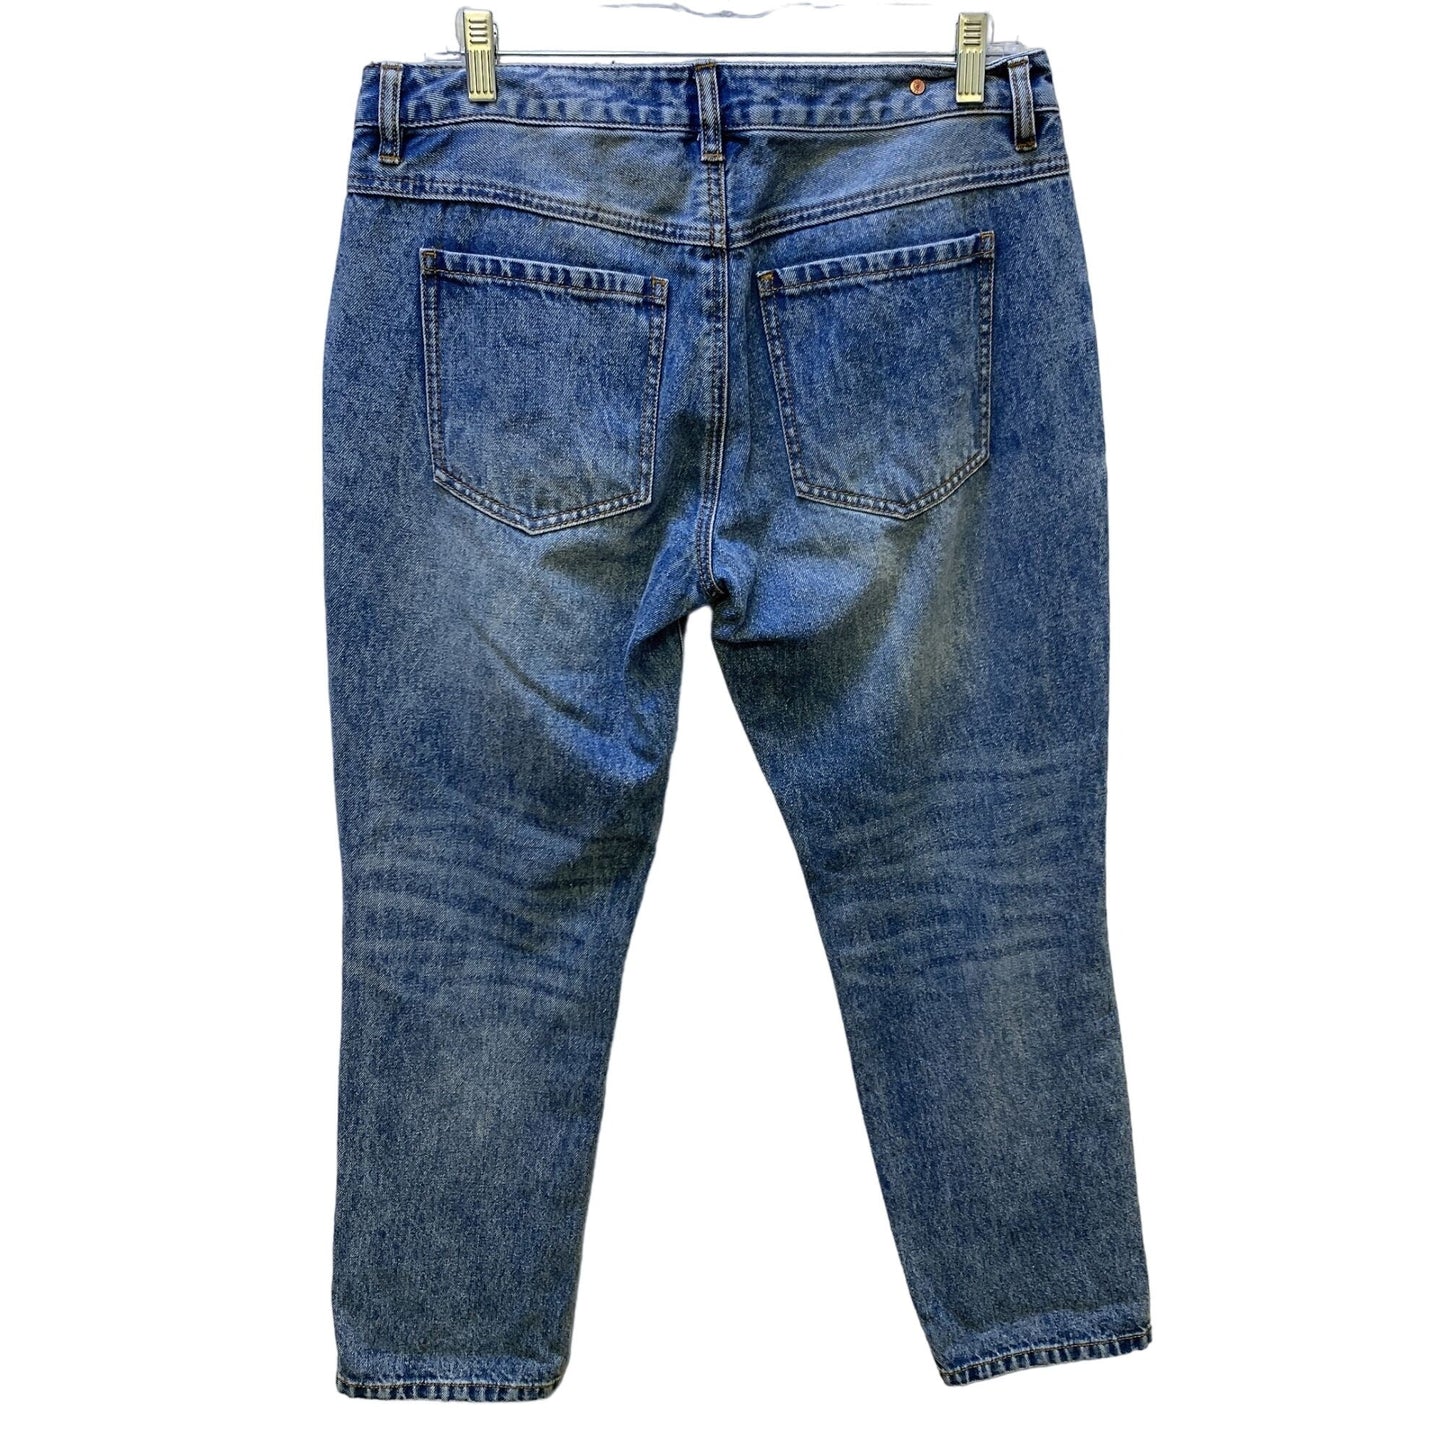 *NWT Cabi Blue Distressed Denim Jeans Size 6